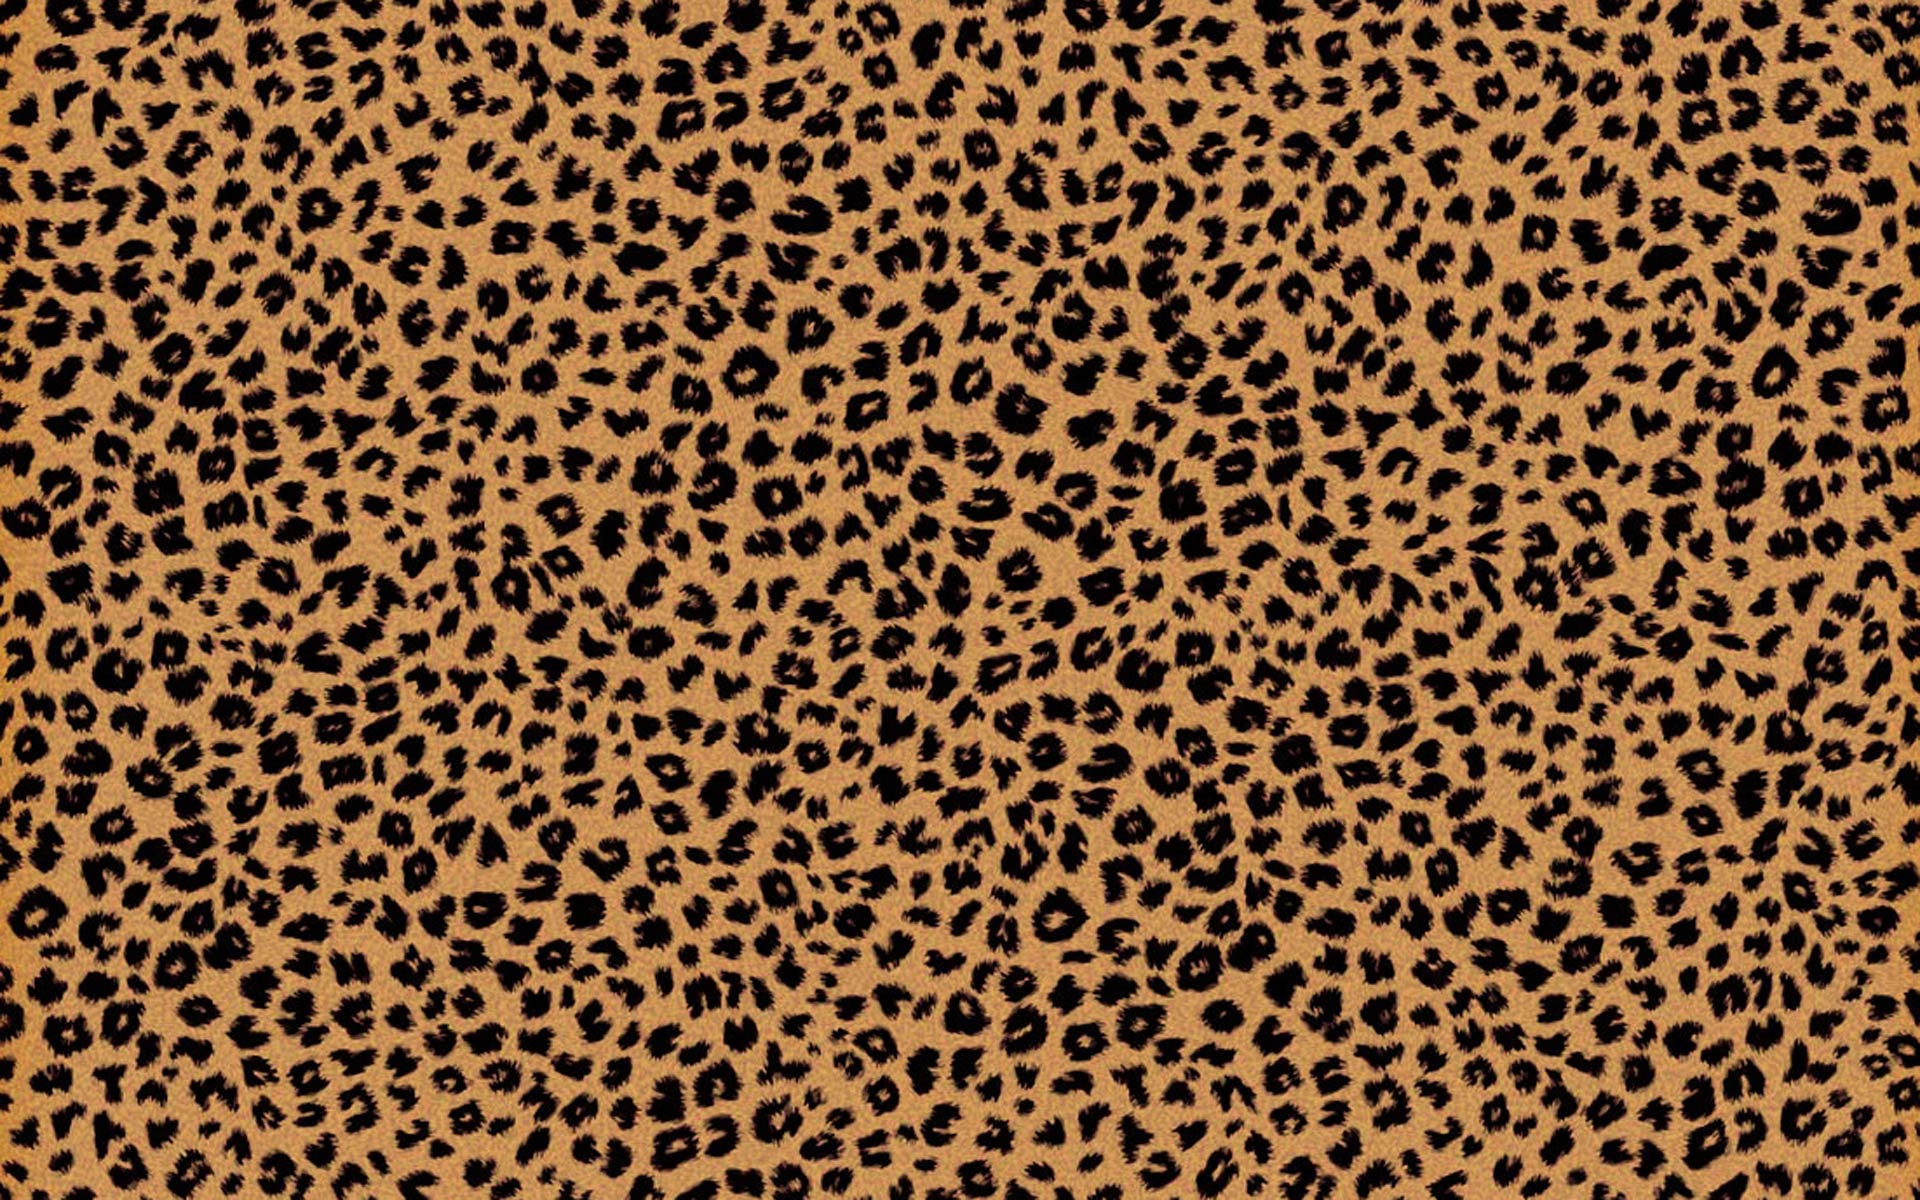 3. Cheetah Print Nail Design Tutorial - wide 9